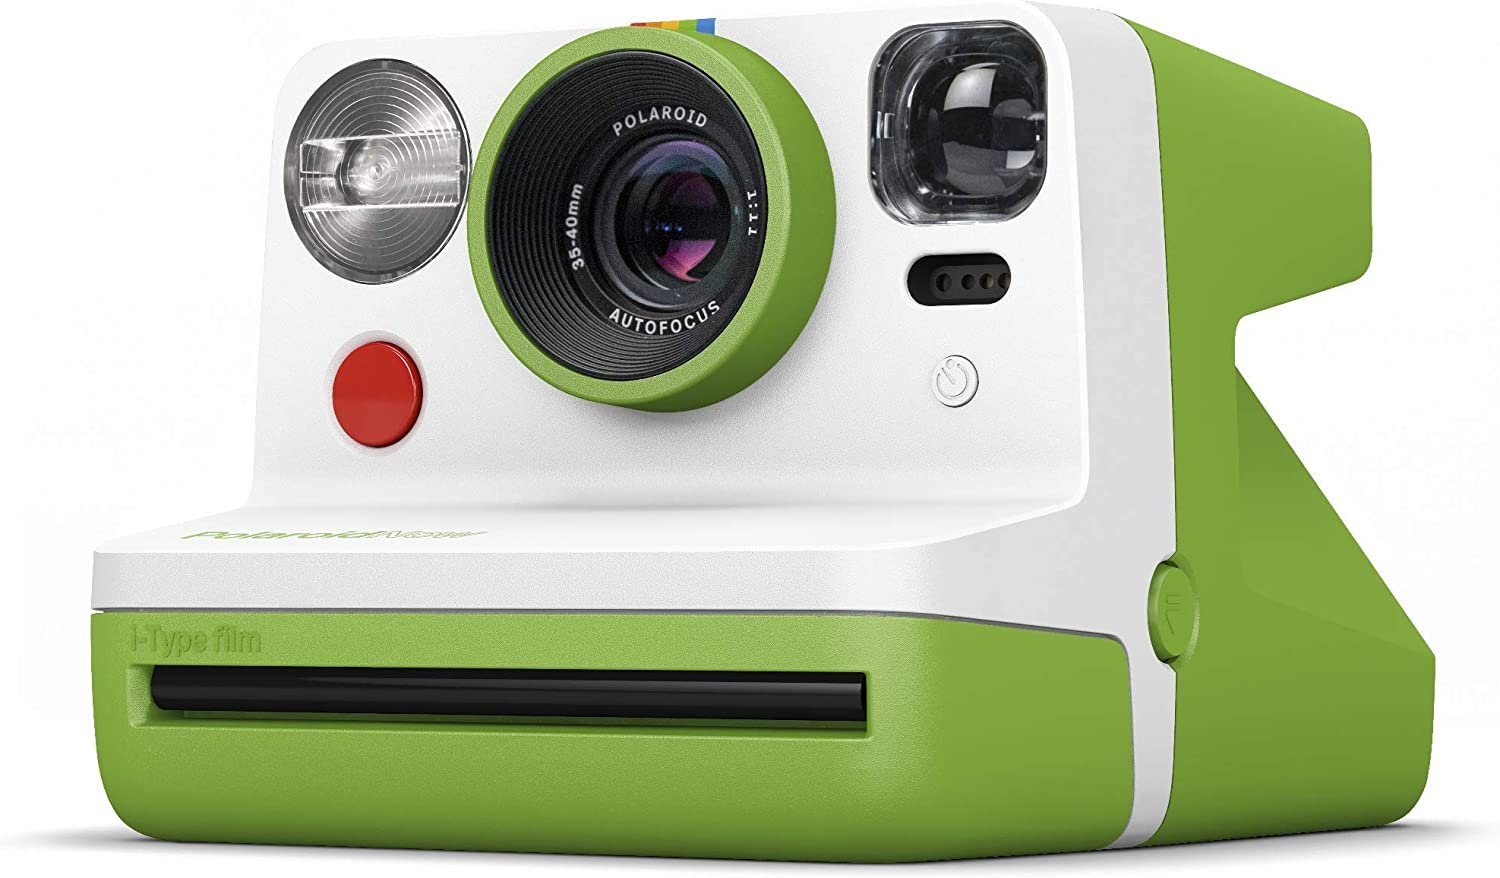 Sofortbildkamera - NOW Polaroid Sofortbildkamera Grün